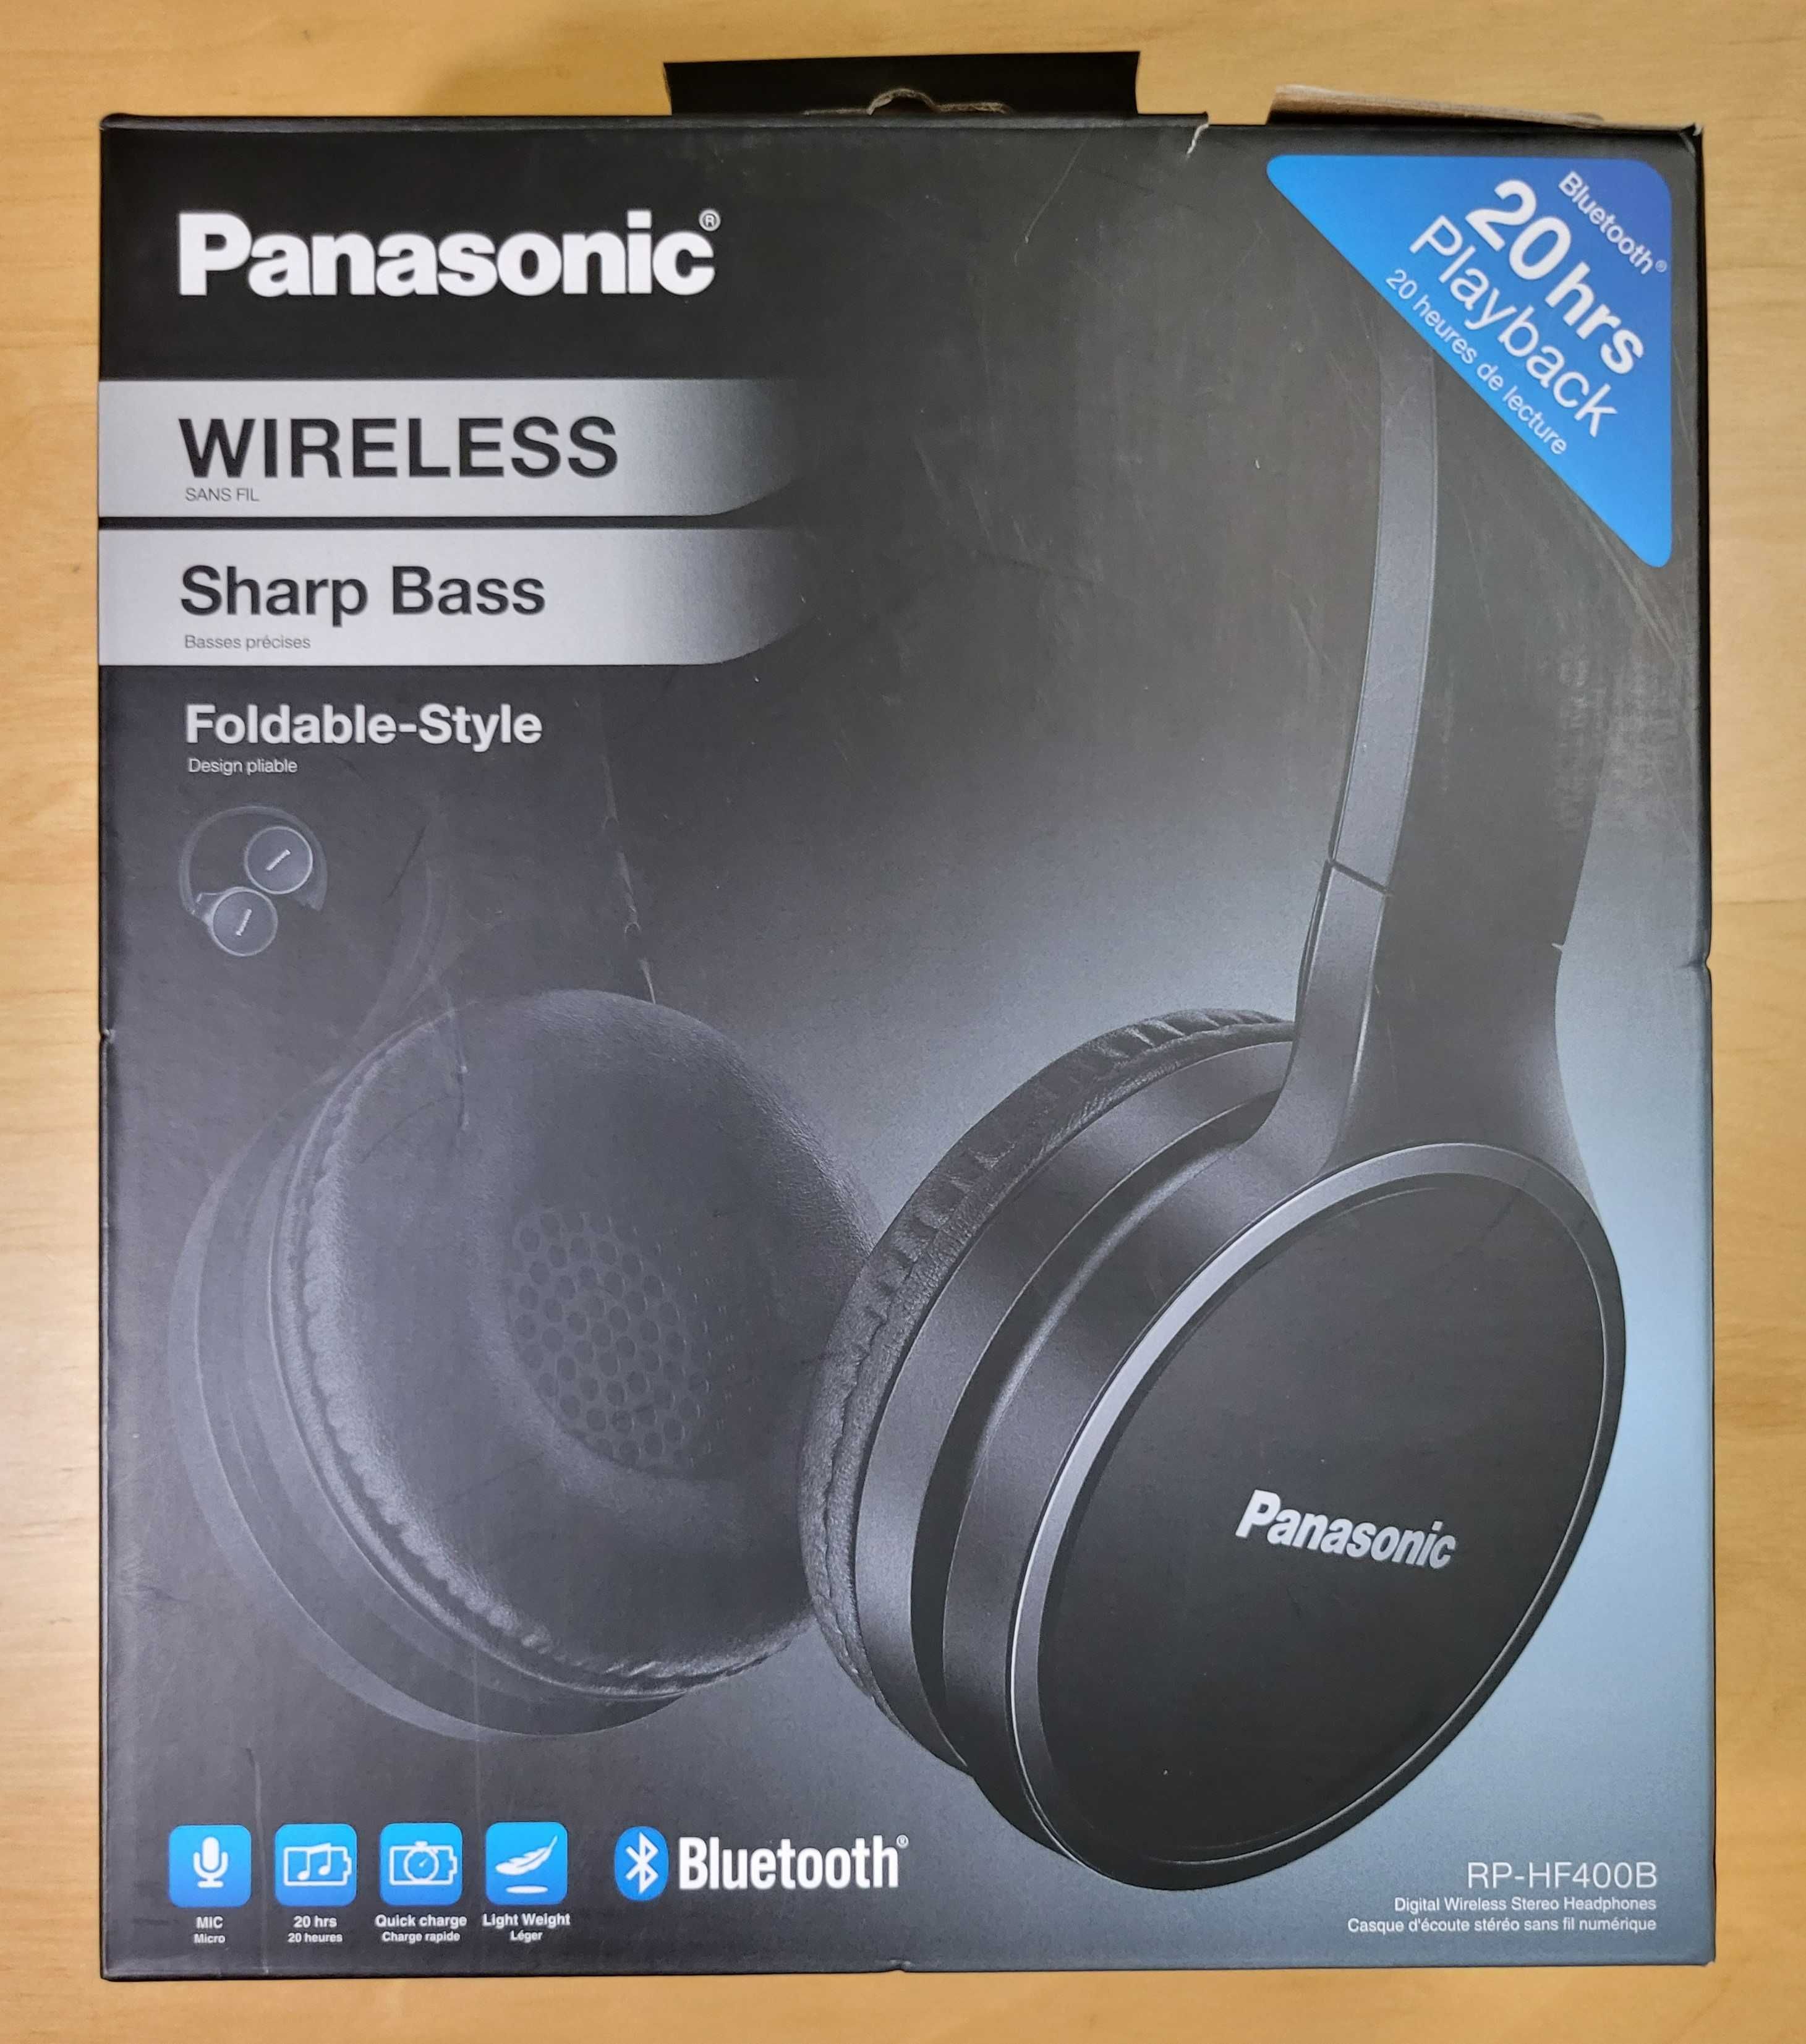 Bezprzewodowe słuchawki Panasonic RP-HF400B